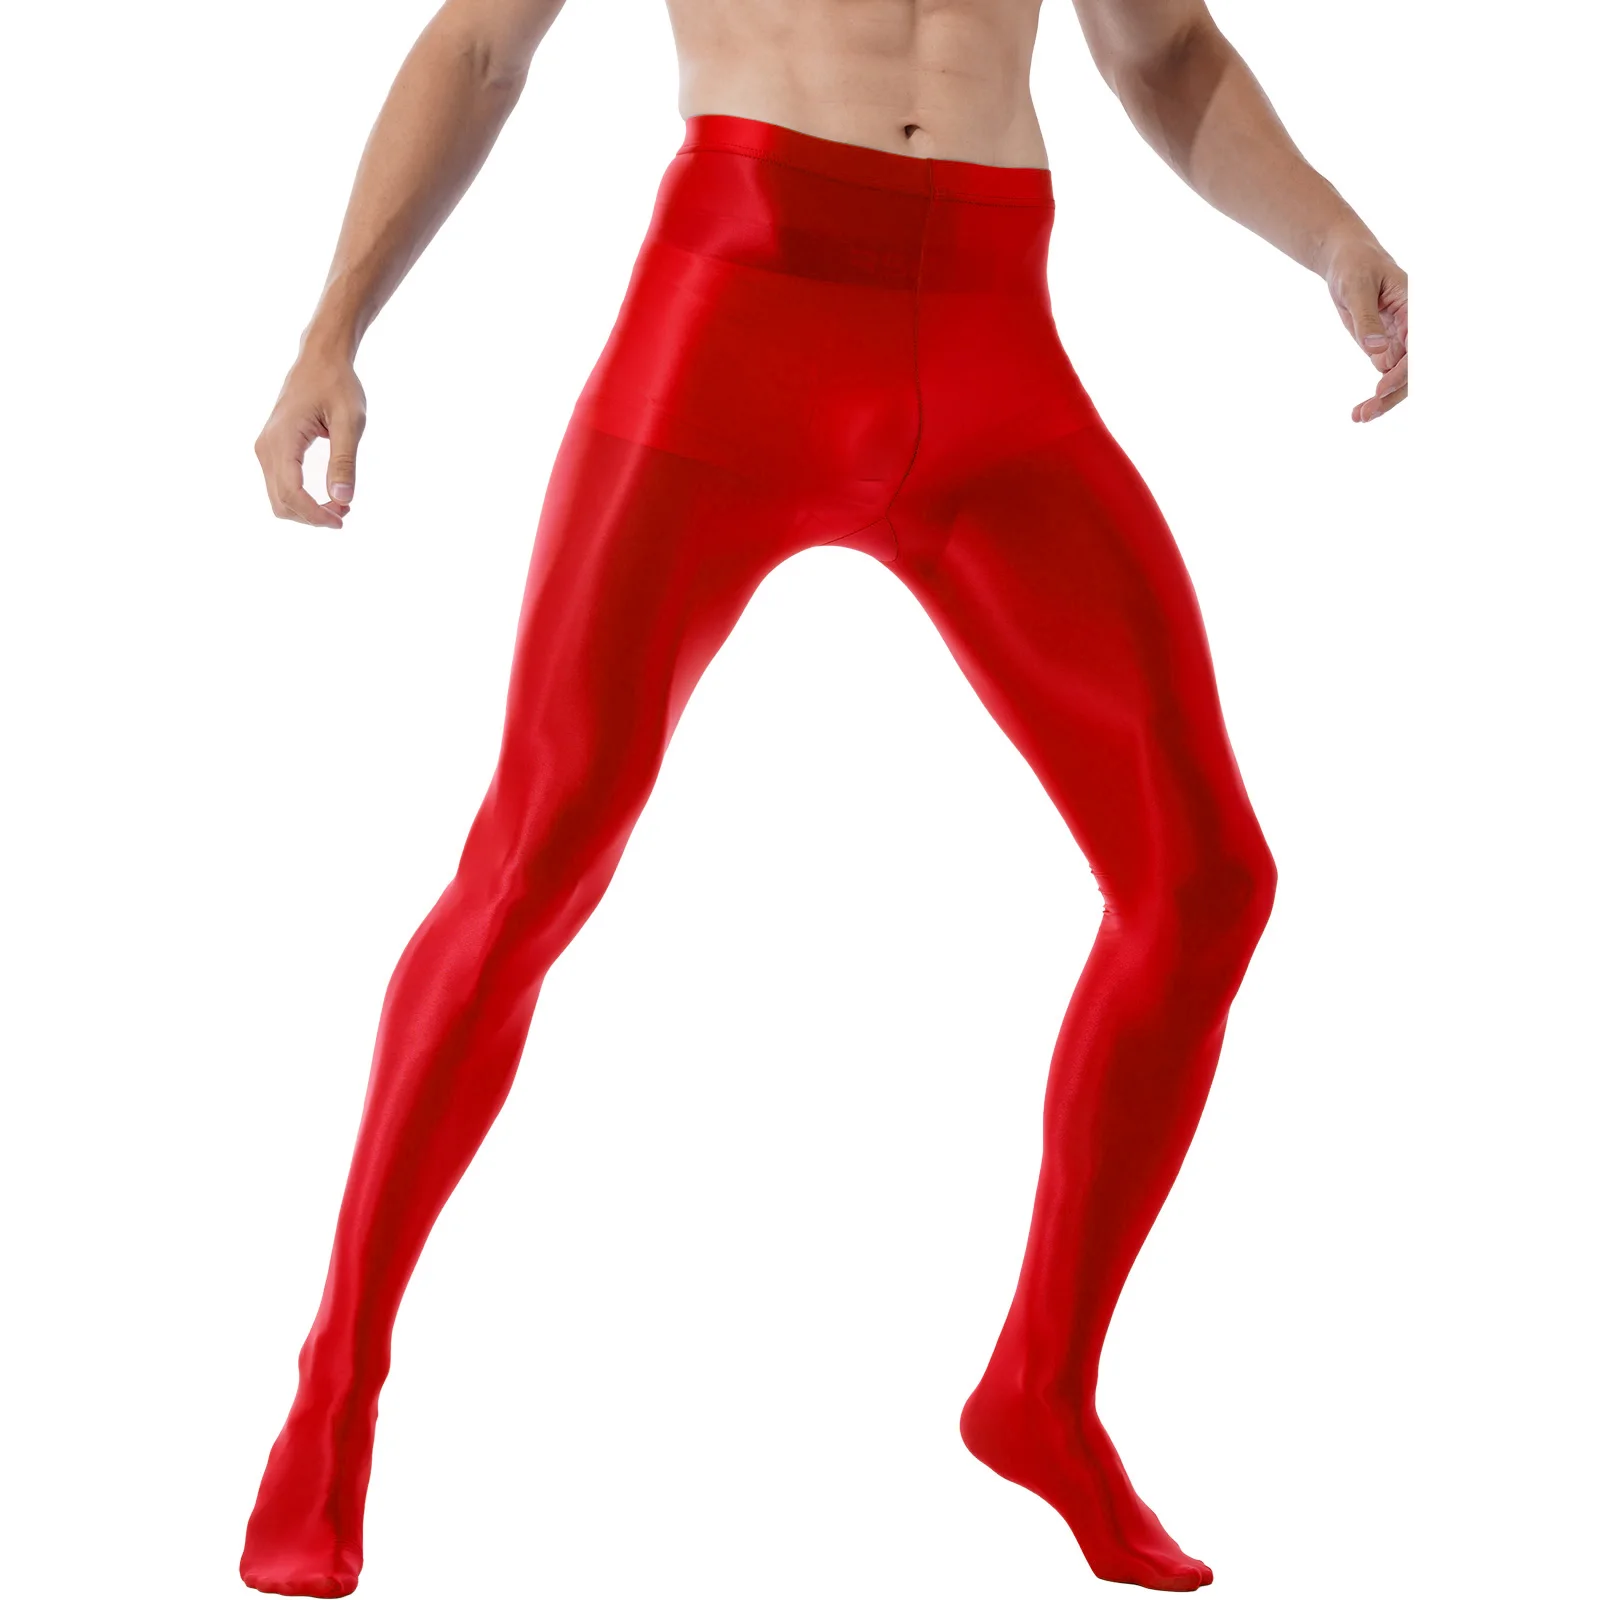 

Men Fashion Glossy Pantyhose Stockings Ballet Dance Yoga Leggings Pants Elastic Training Fitness Workout Sports Trousers Tights